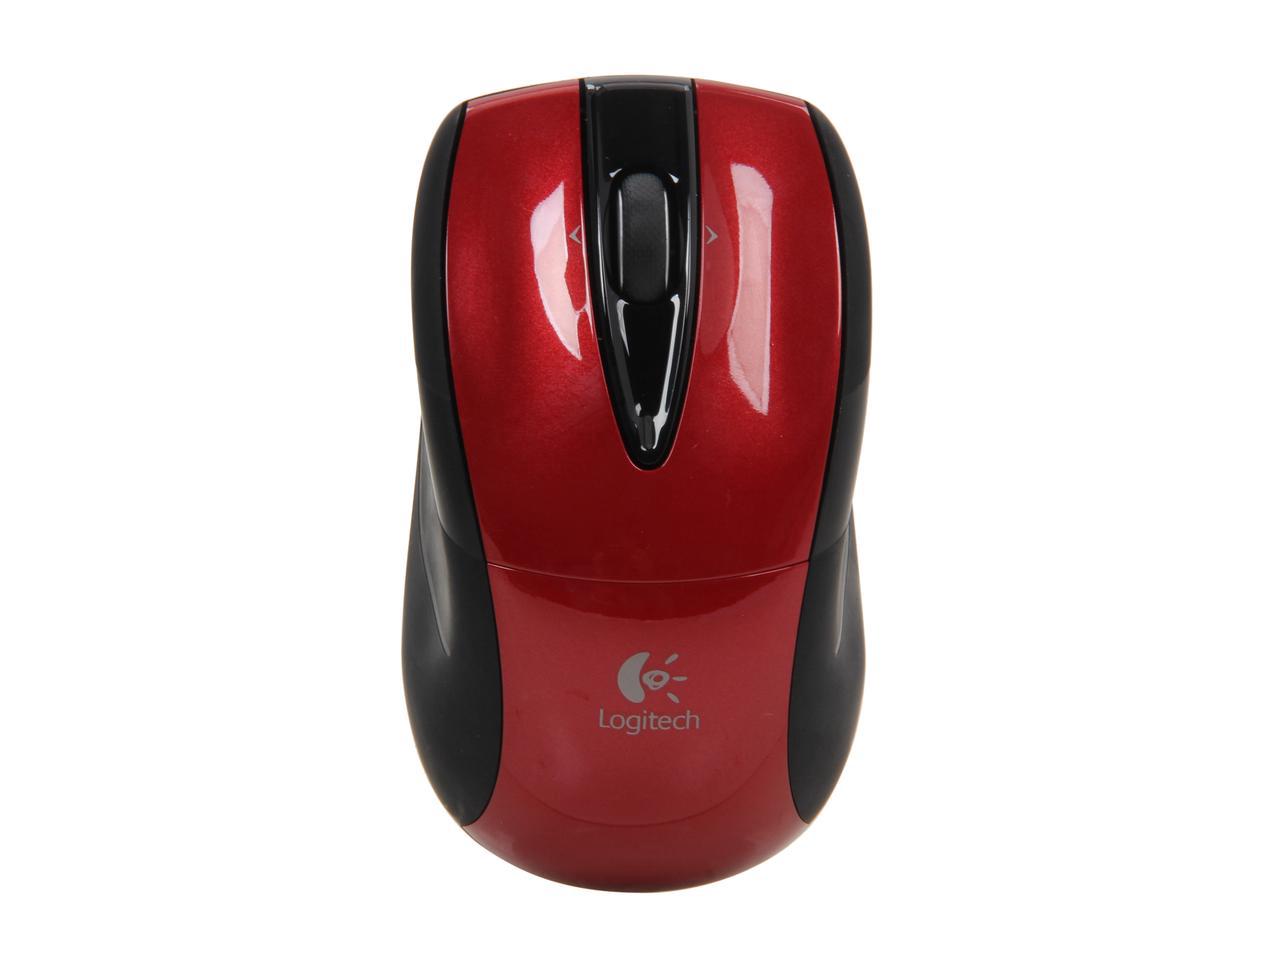 Logitech Wireless Mouse M525 - Red / Black | Help Tech Co. Ltd